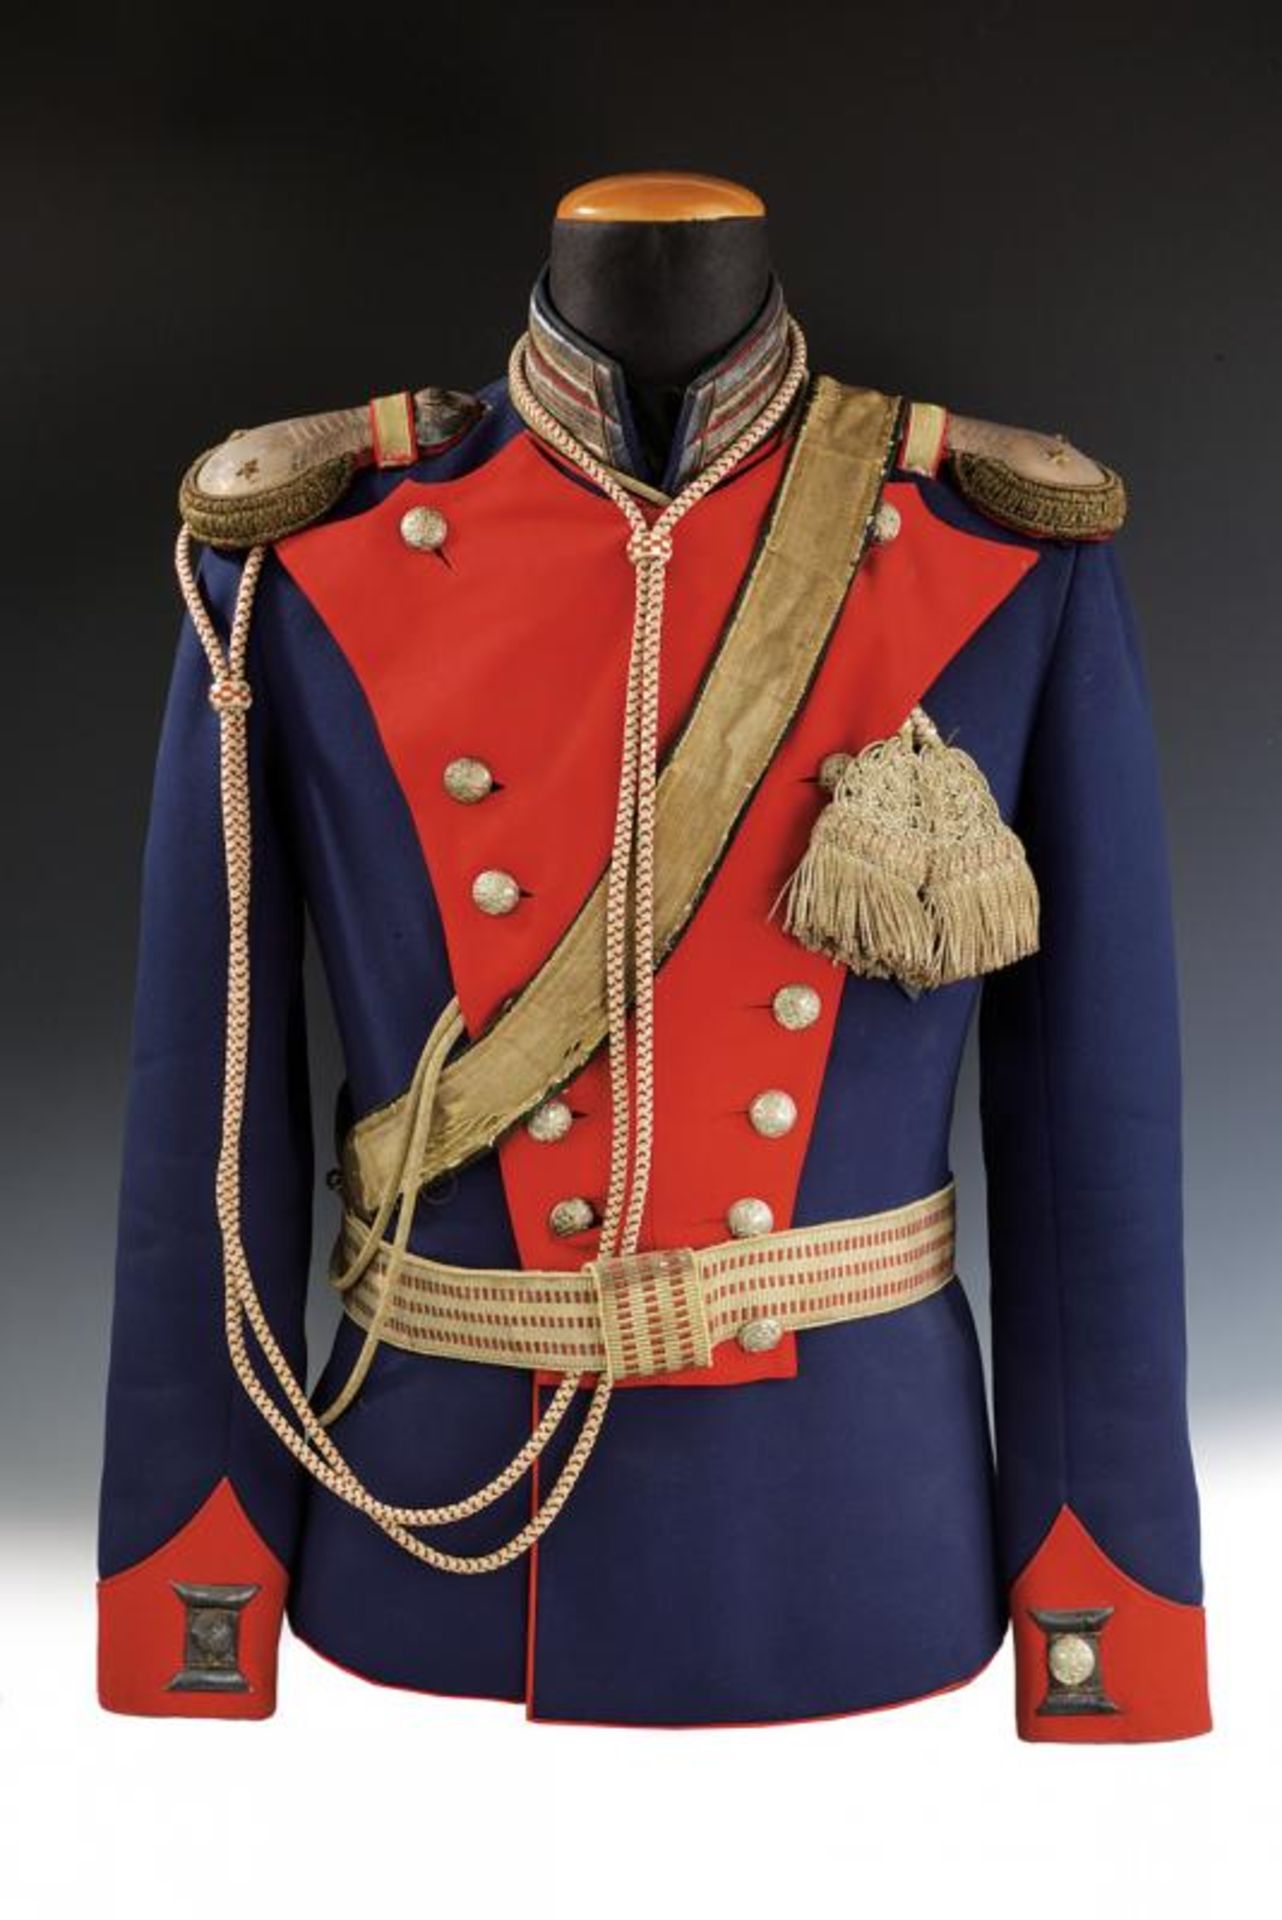 A very scarce uniform of the Leib Guard Dragoon Regiment